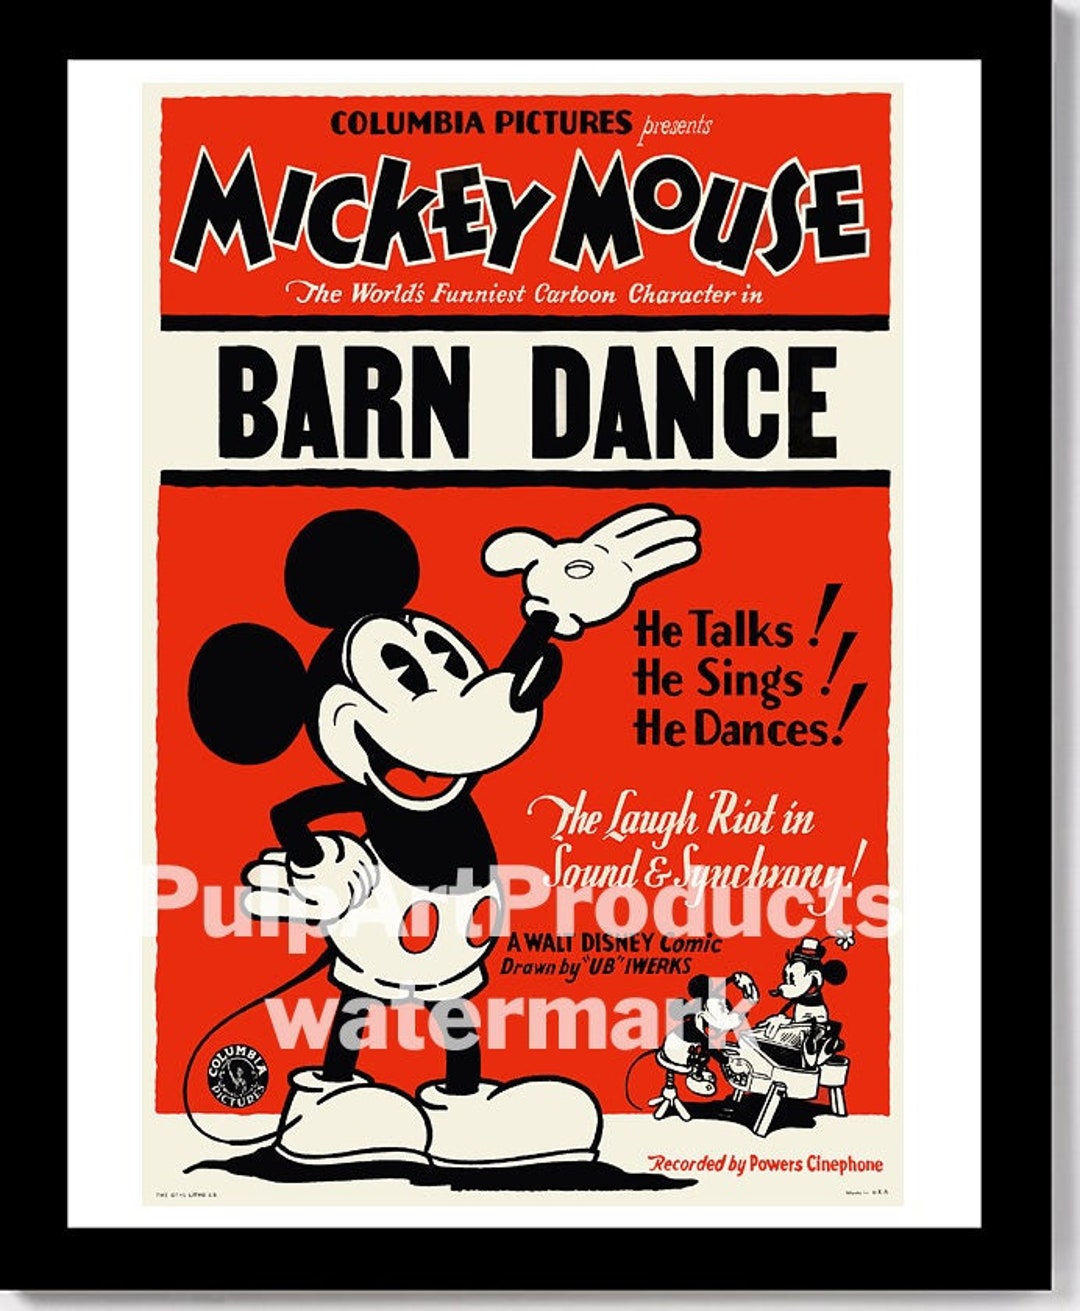 DISNEY BARN DANCE 1929 Early Animation Film Poster - Etsy Schweiz